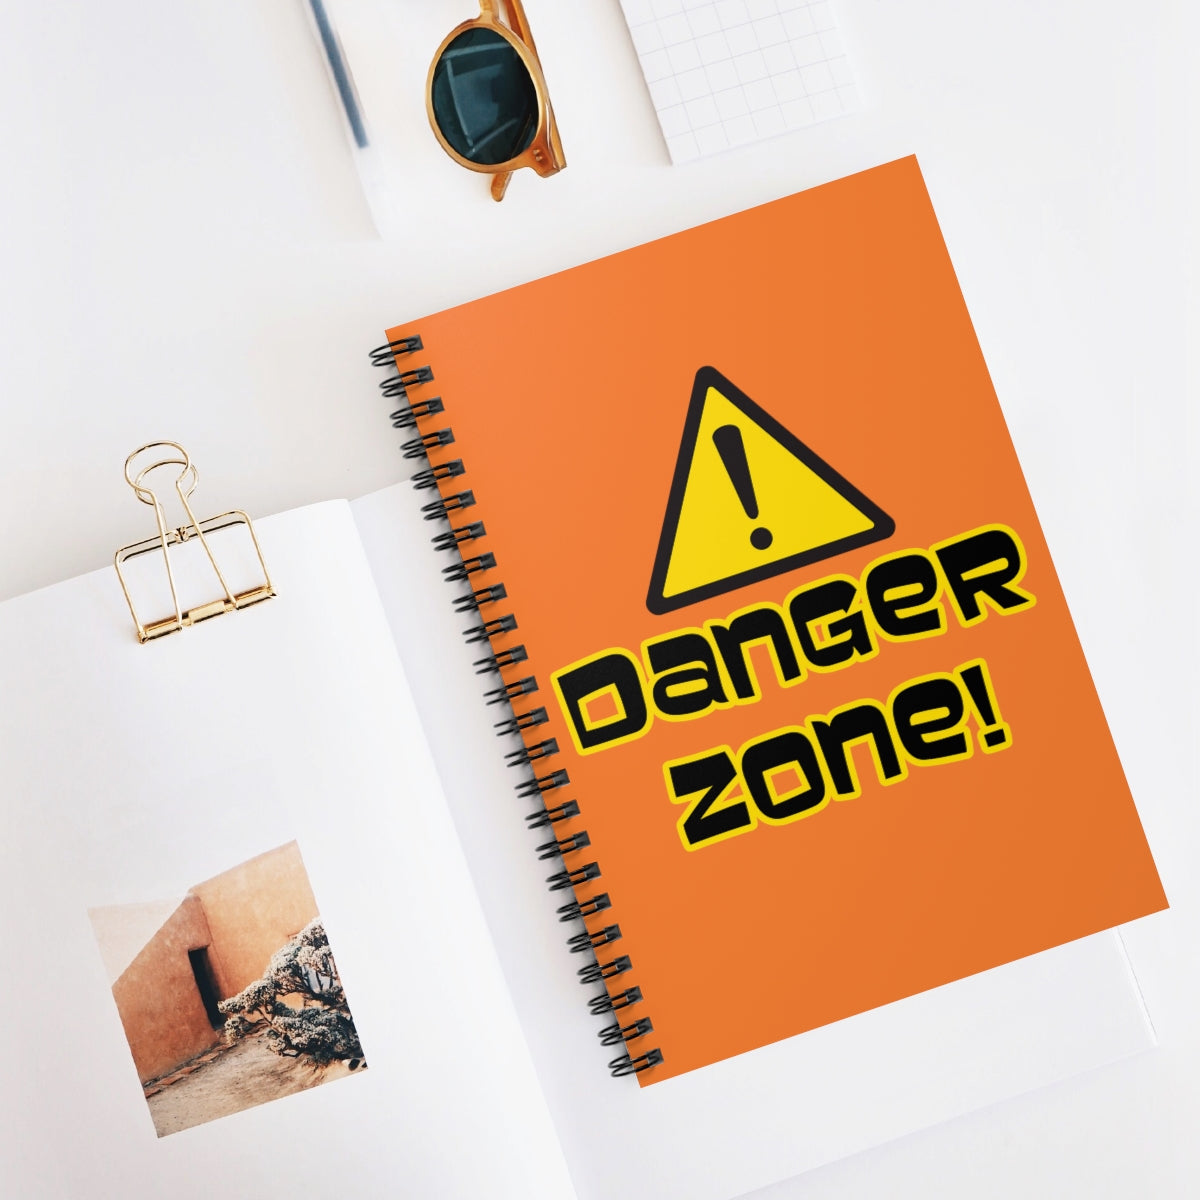 Danger Zone! Archer themed -Spiral Notebook - Ruled LineBrainStorm Tees